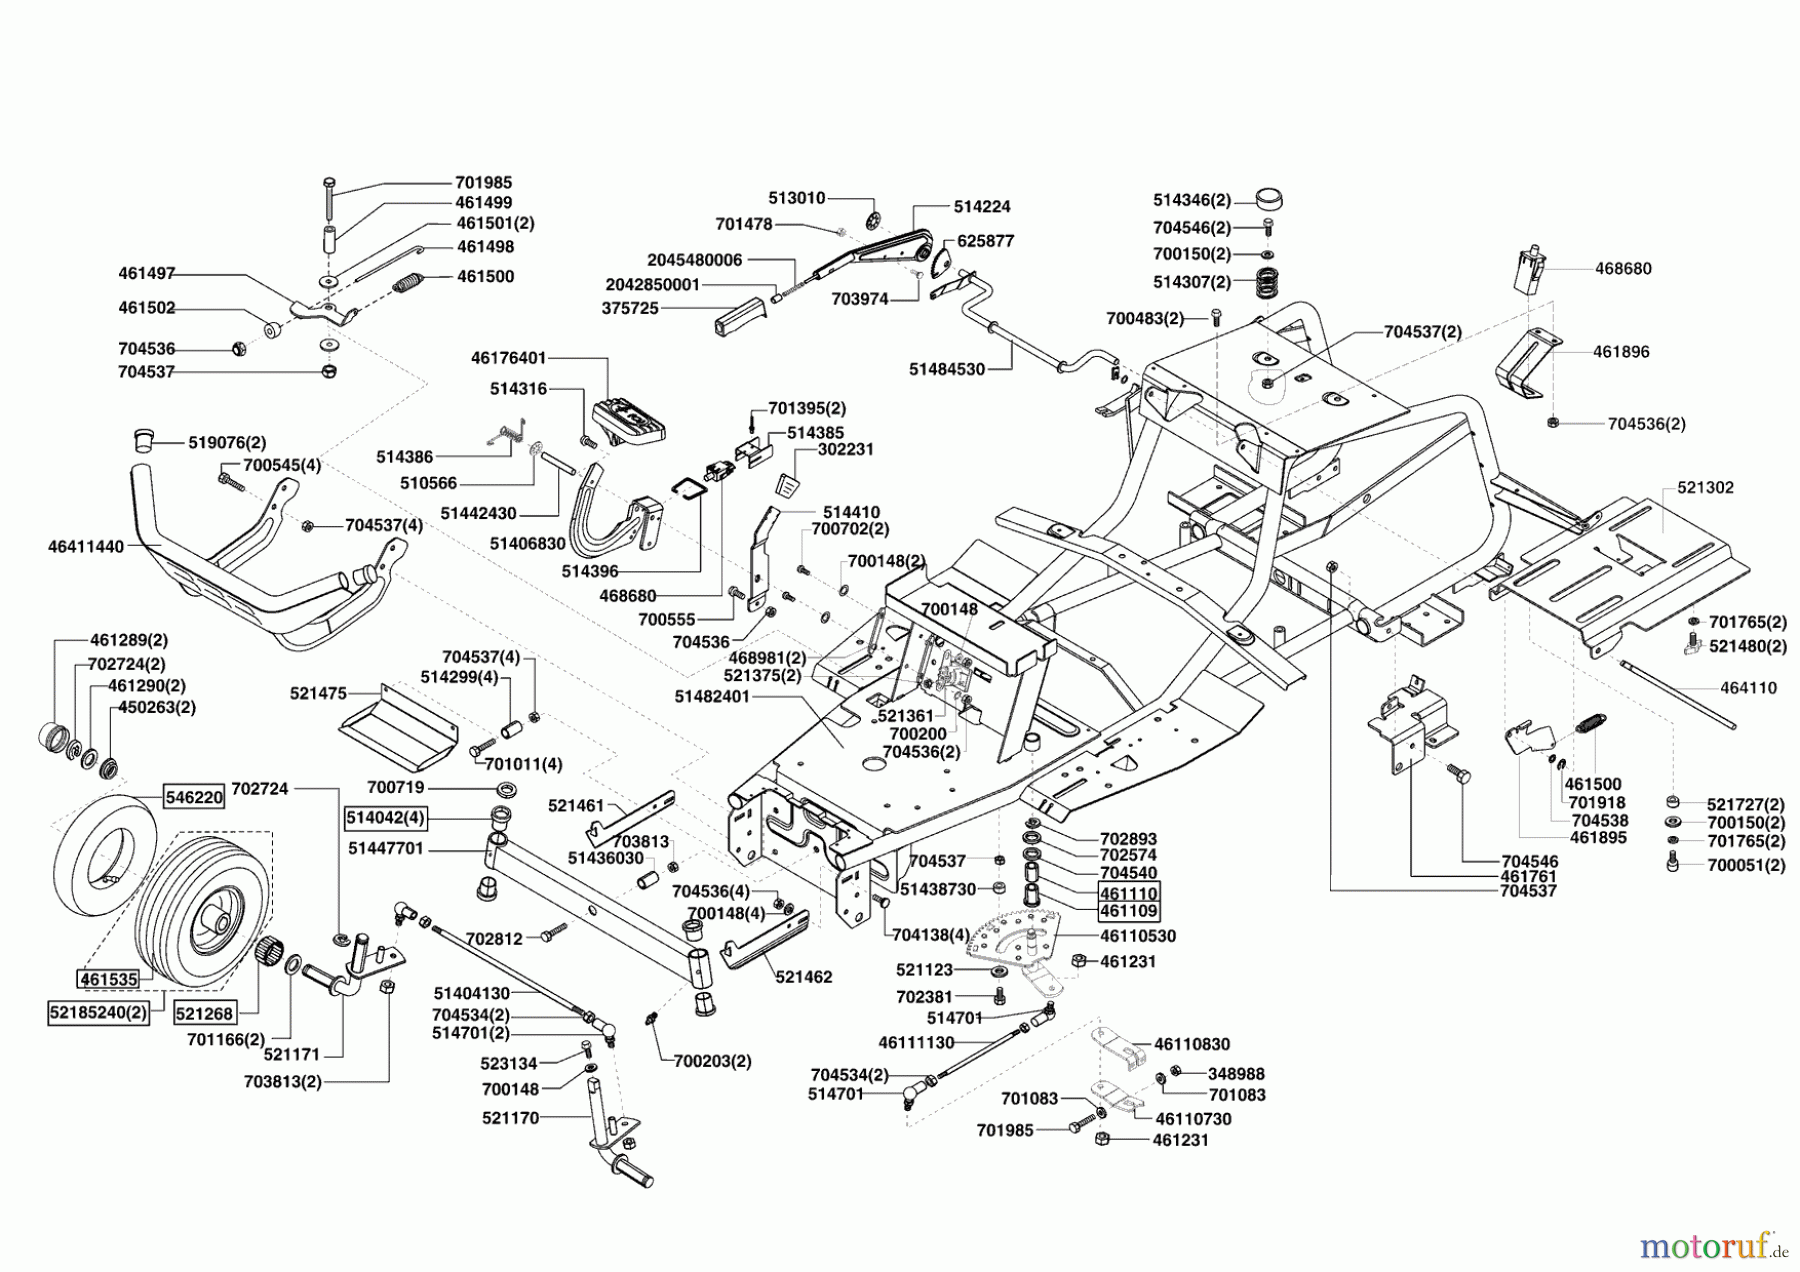  AL-KO Gartentechnik Rasentraktor T18-102 HD MASPORT Seite 2